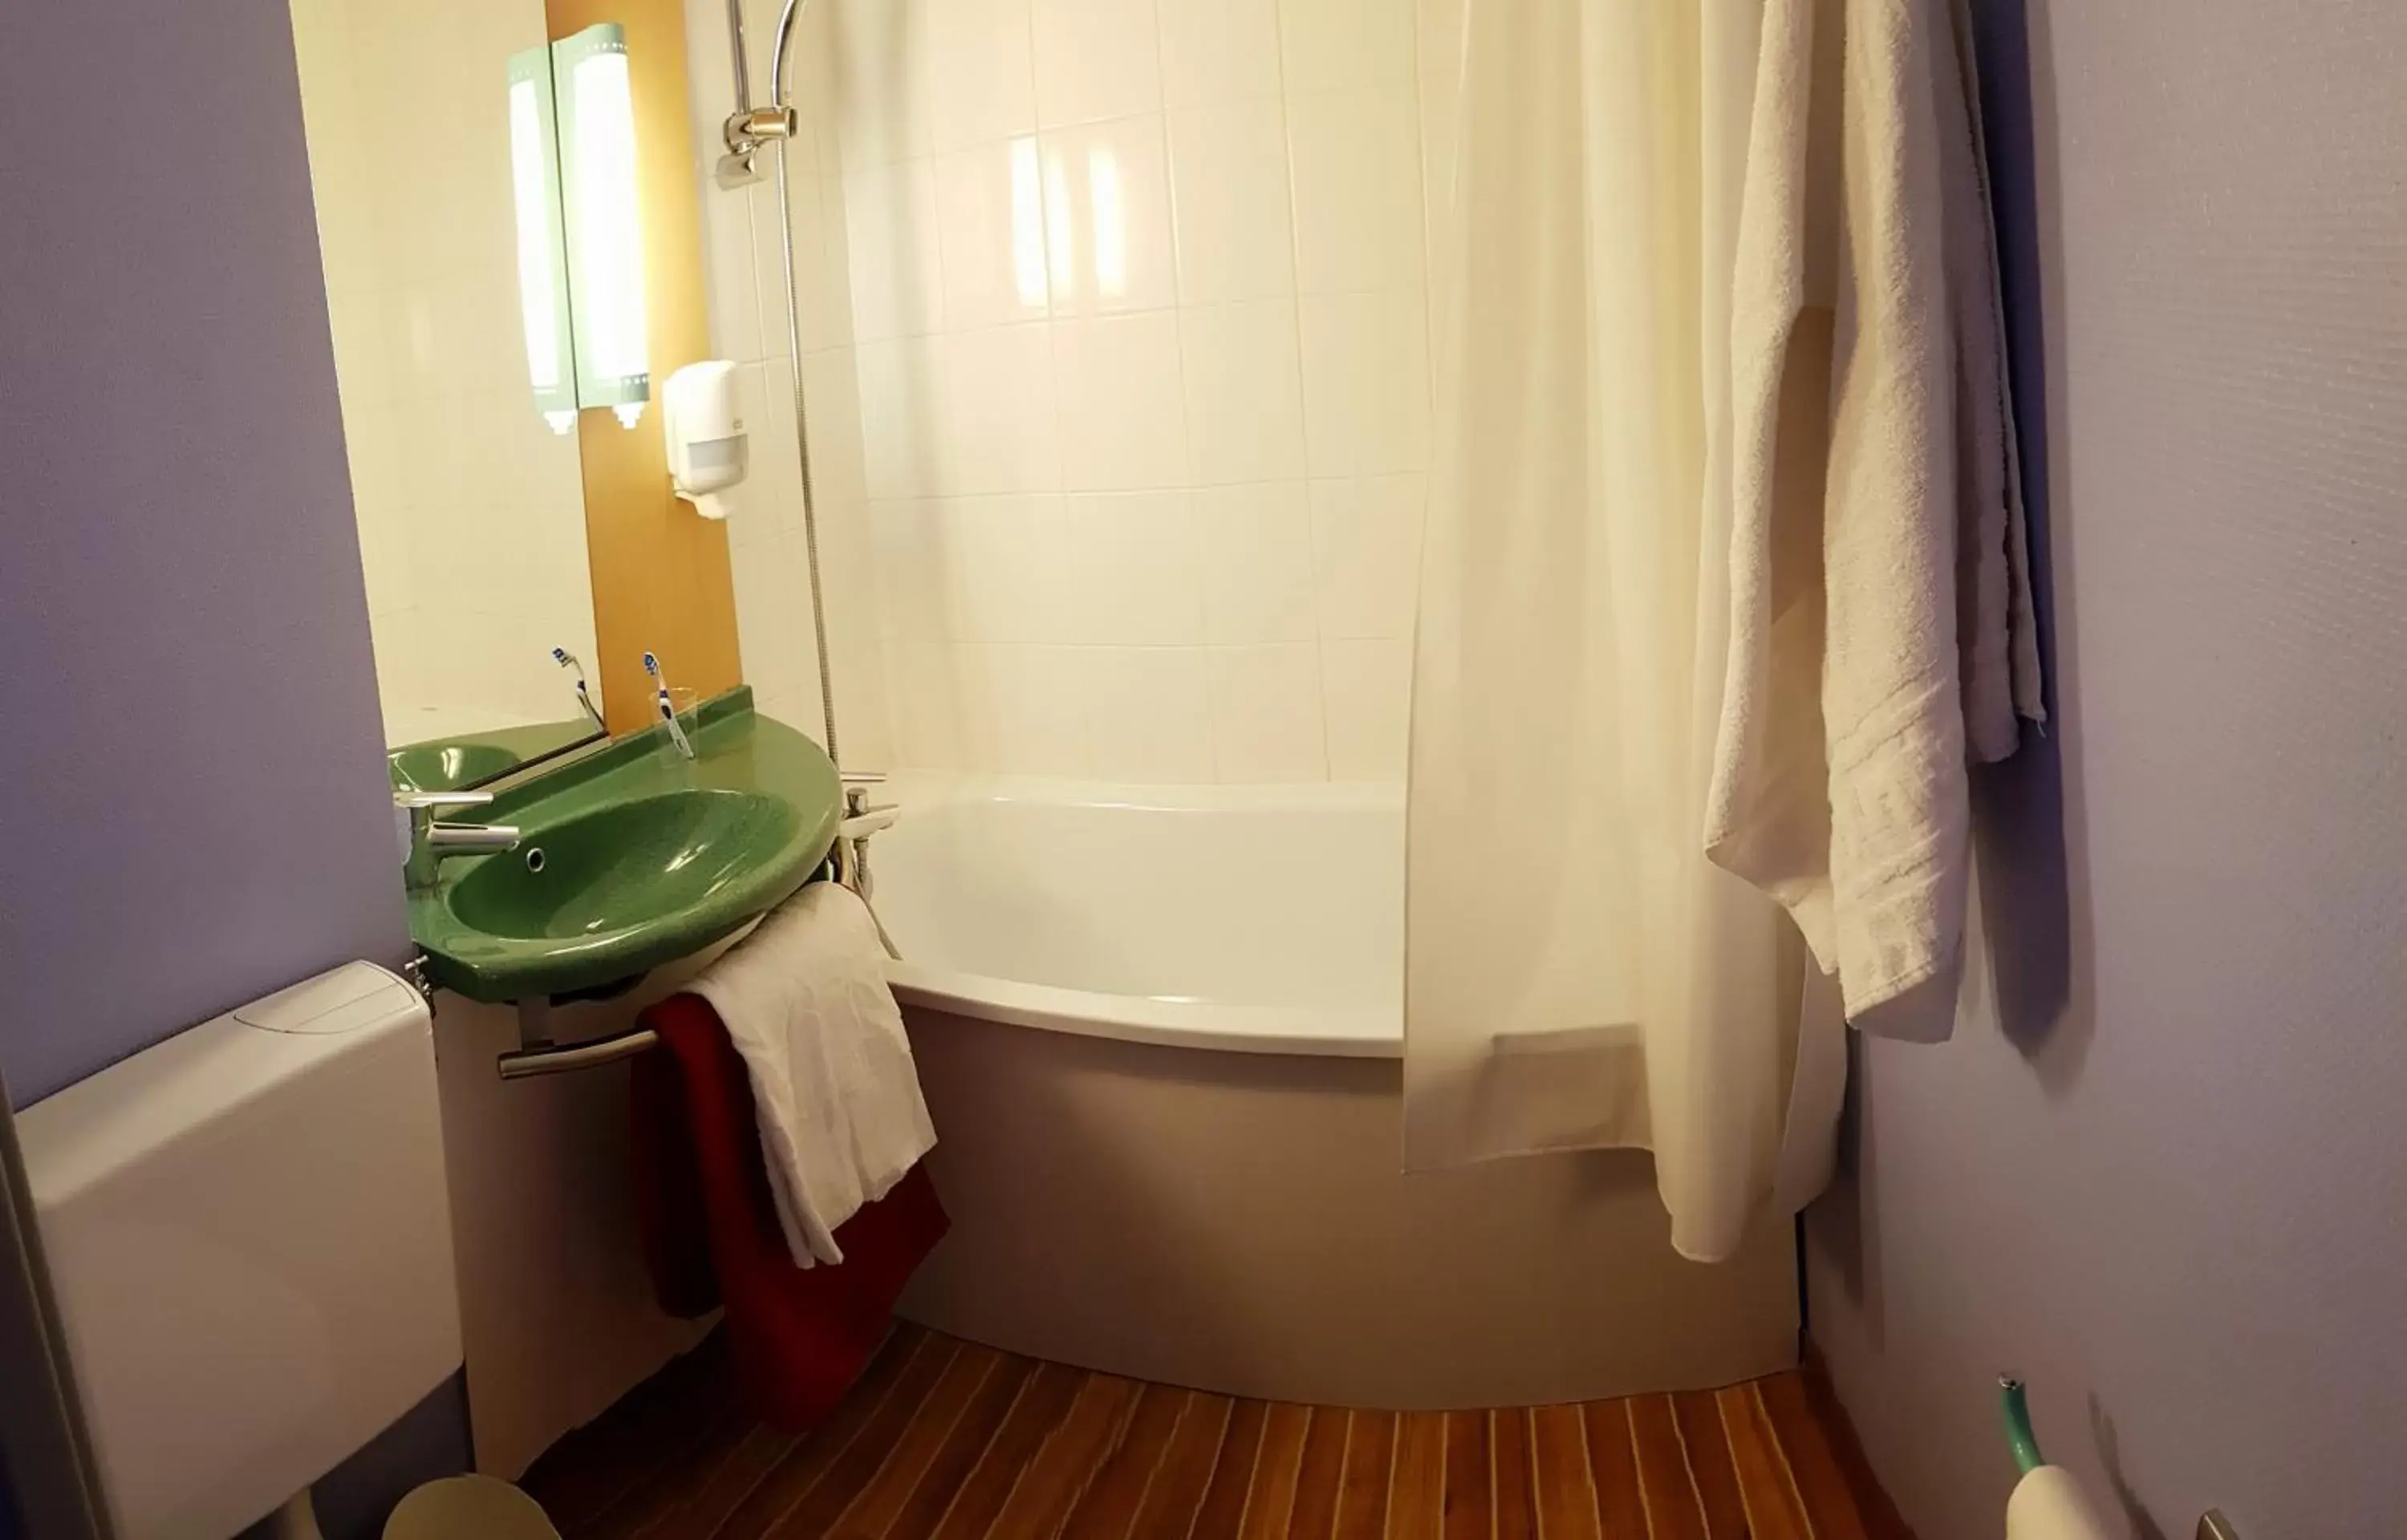 Bathroom in Hotel Bonanite